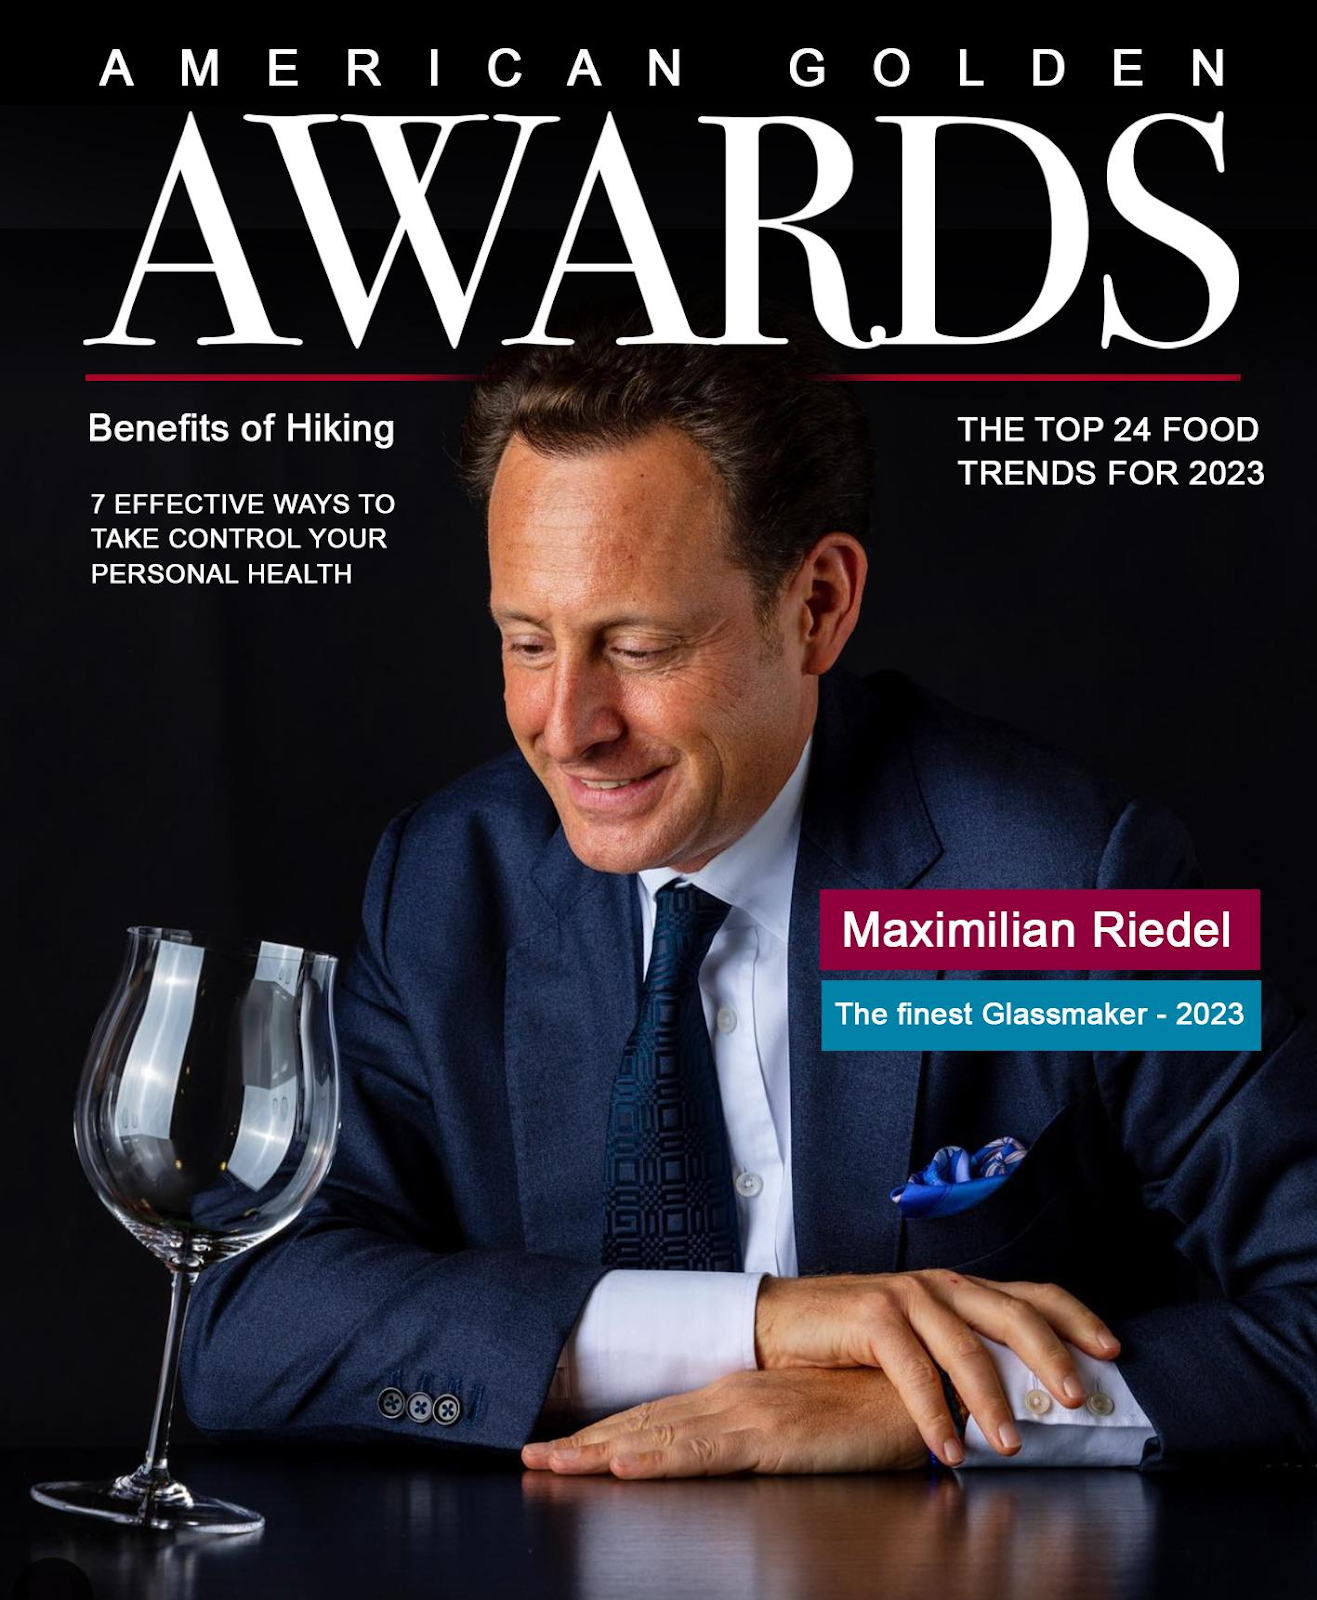 America Golden Award Honors Maximilian Riedel as the Finest Glassmaker 2023